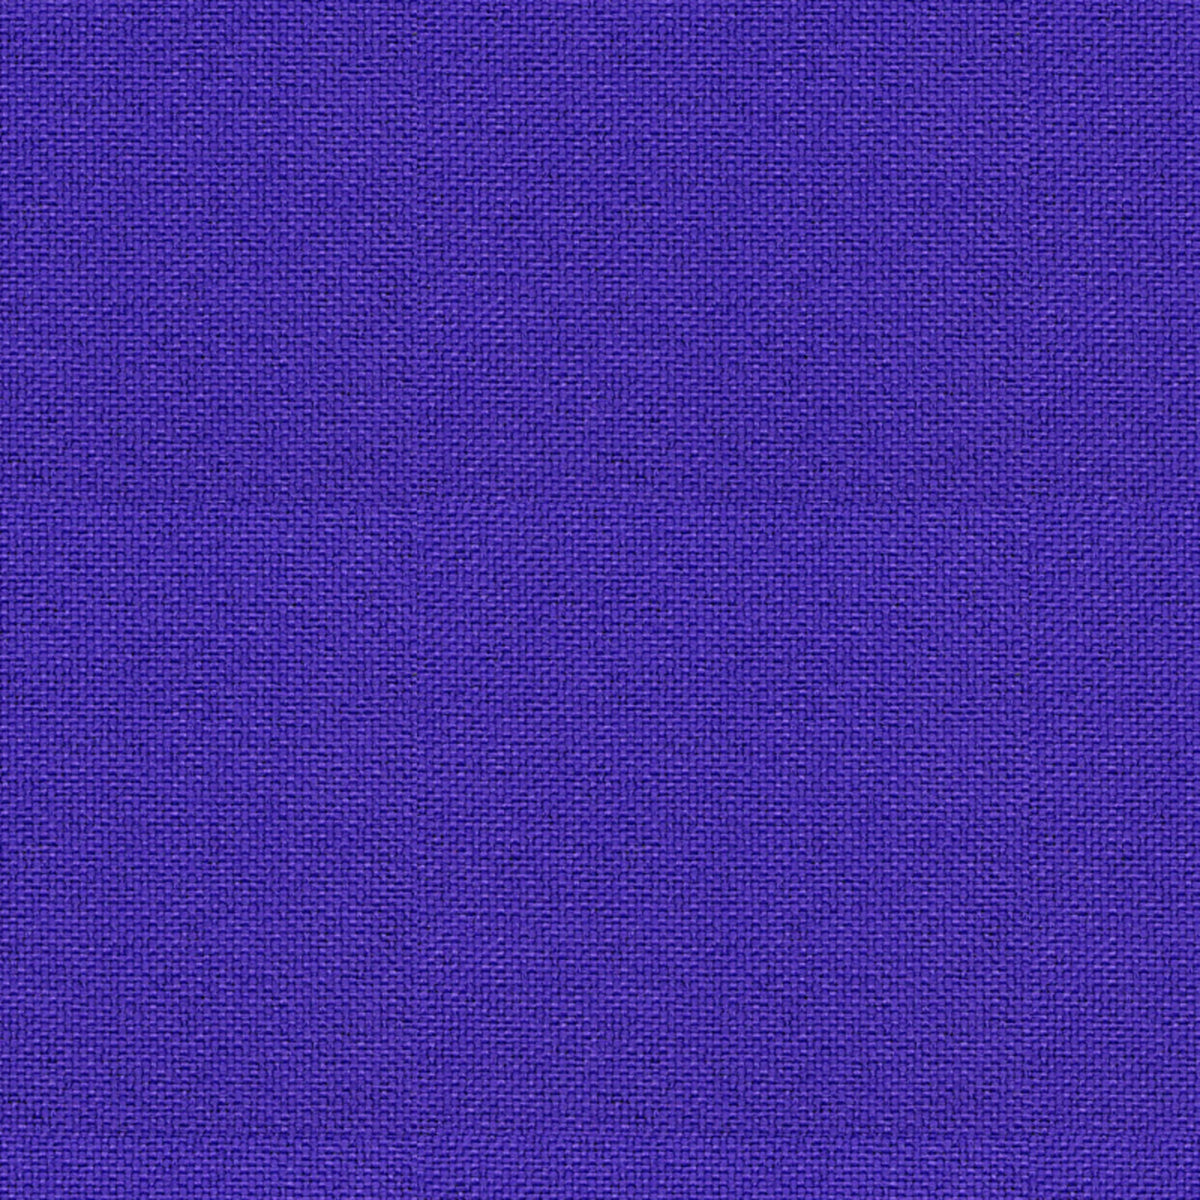 Interweave Lilac Fabric |#| 